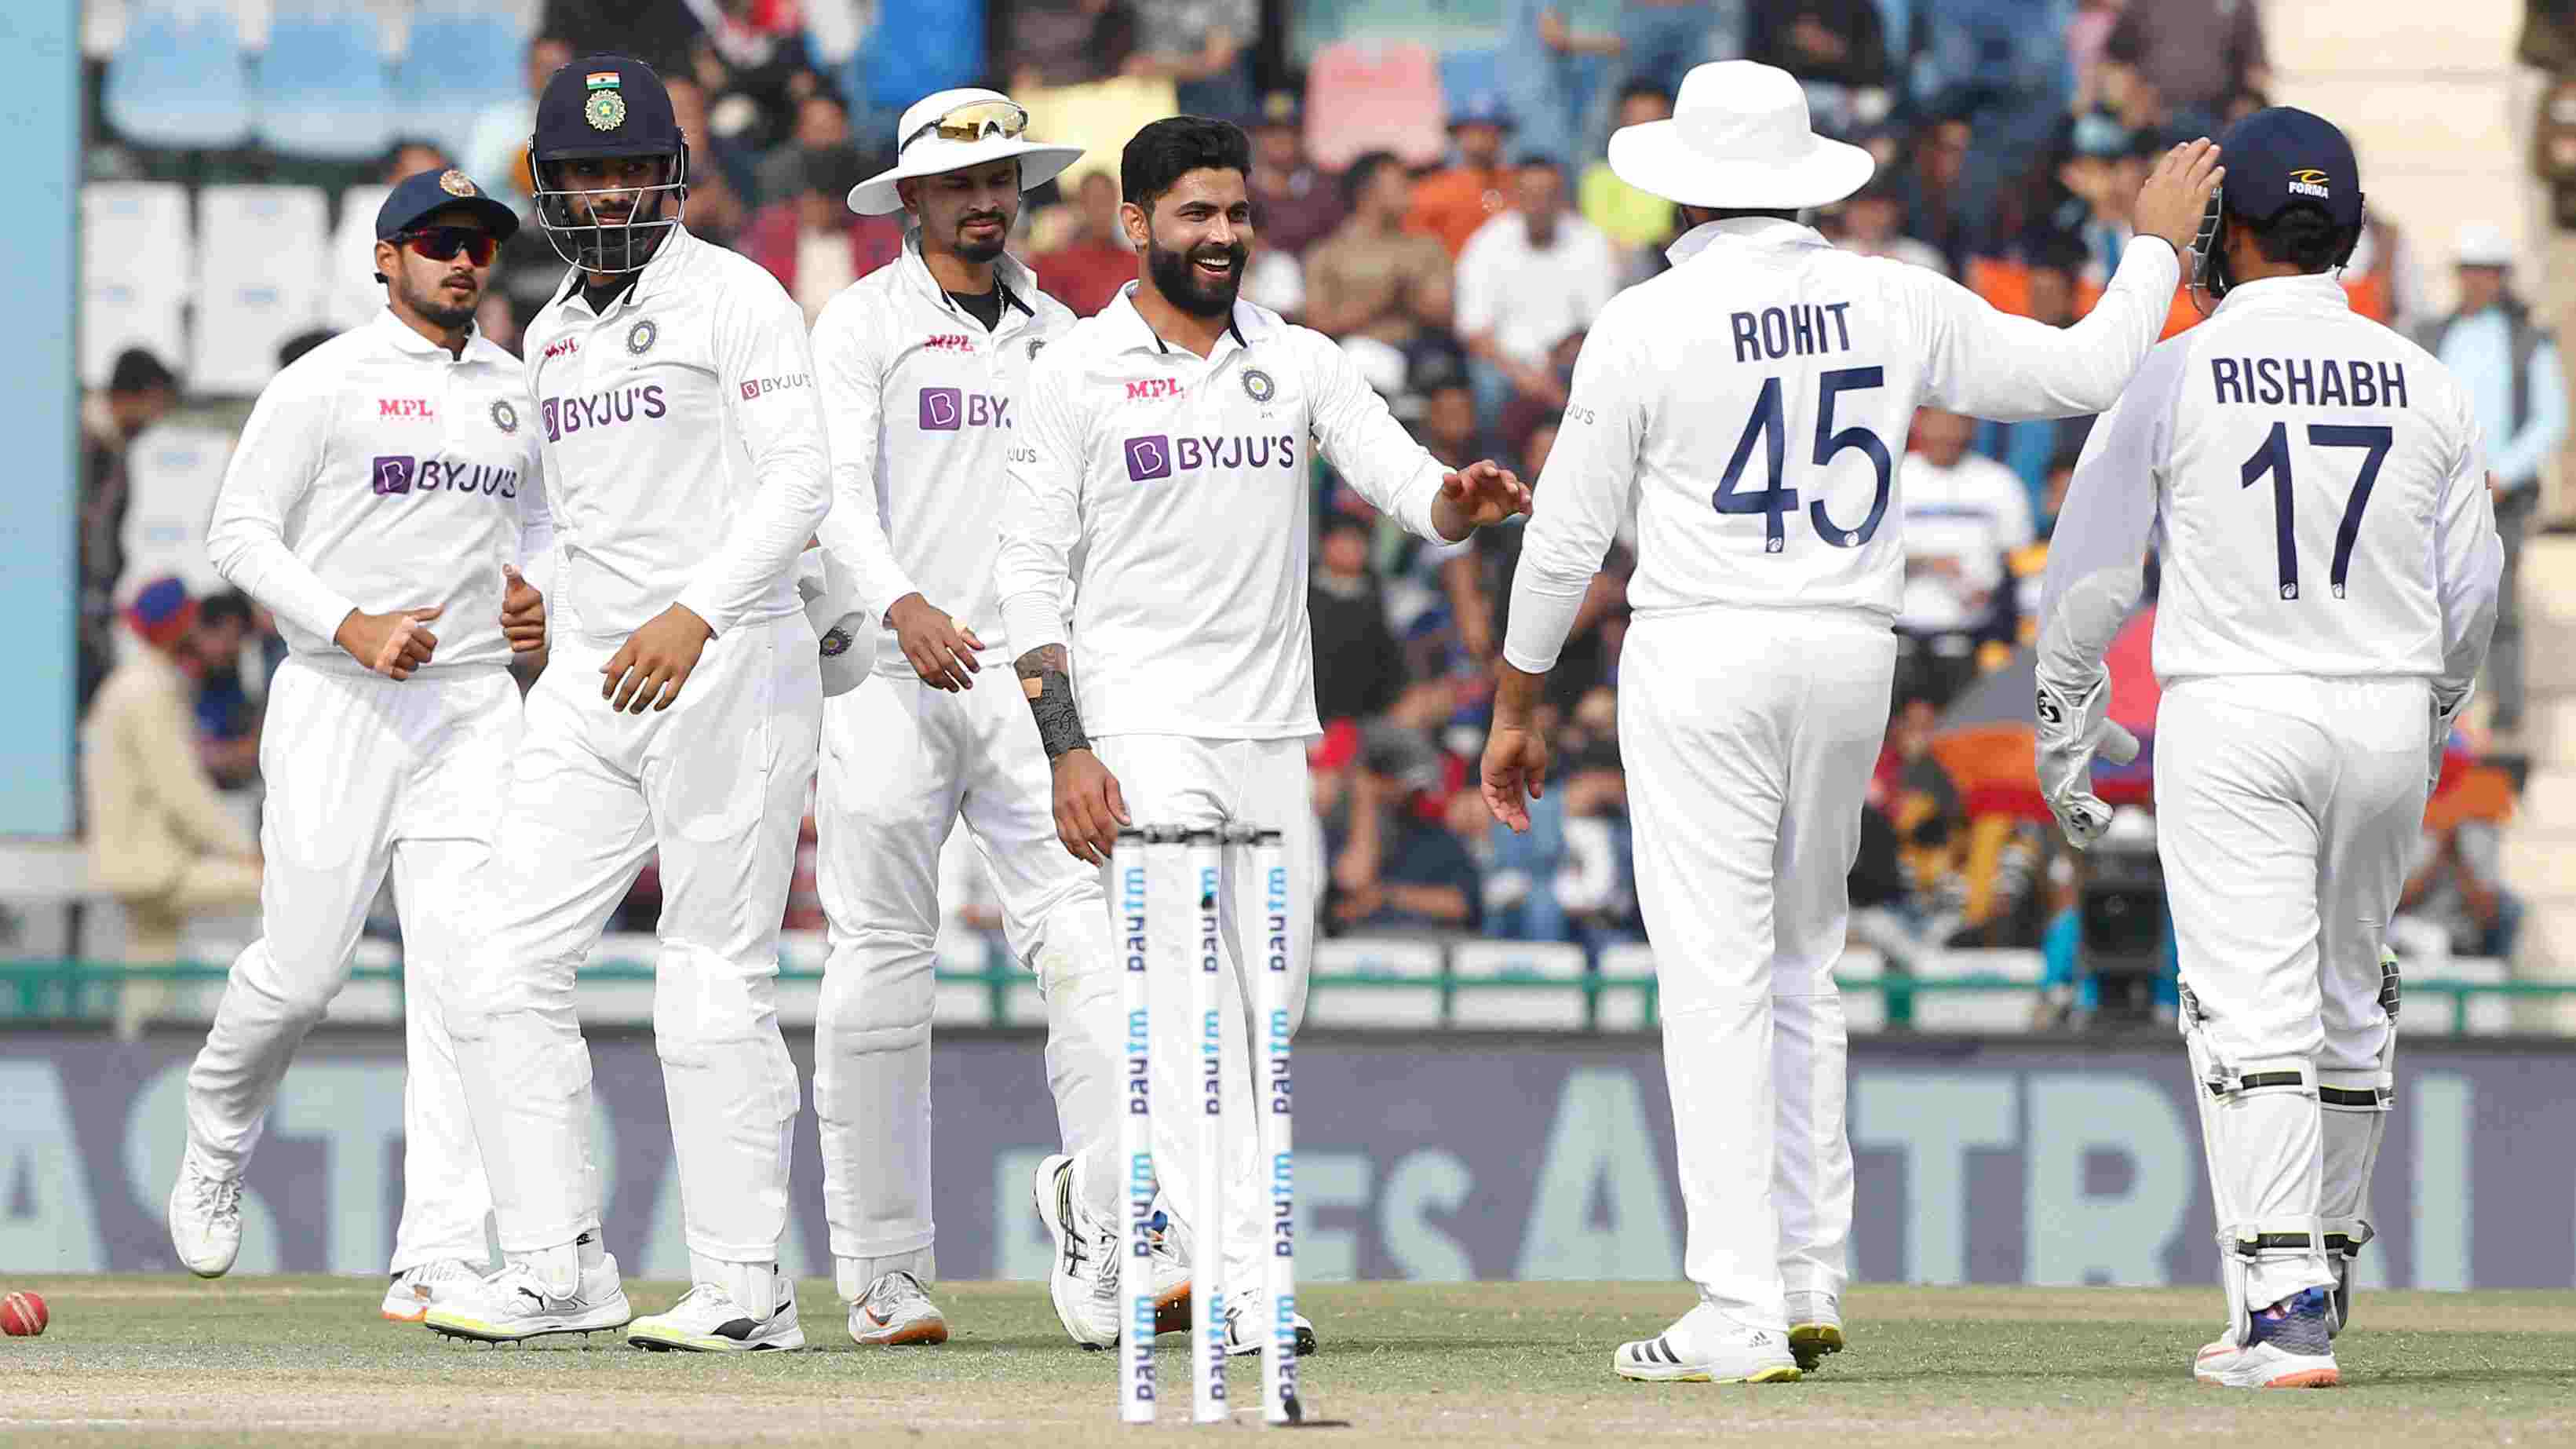 IND vs SL | 1st Test: Ashwin, Jadeja rip through Sri Lankan batting unit as hosts take 1-0 lead 